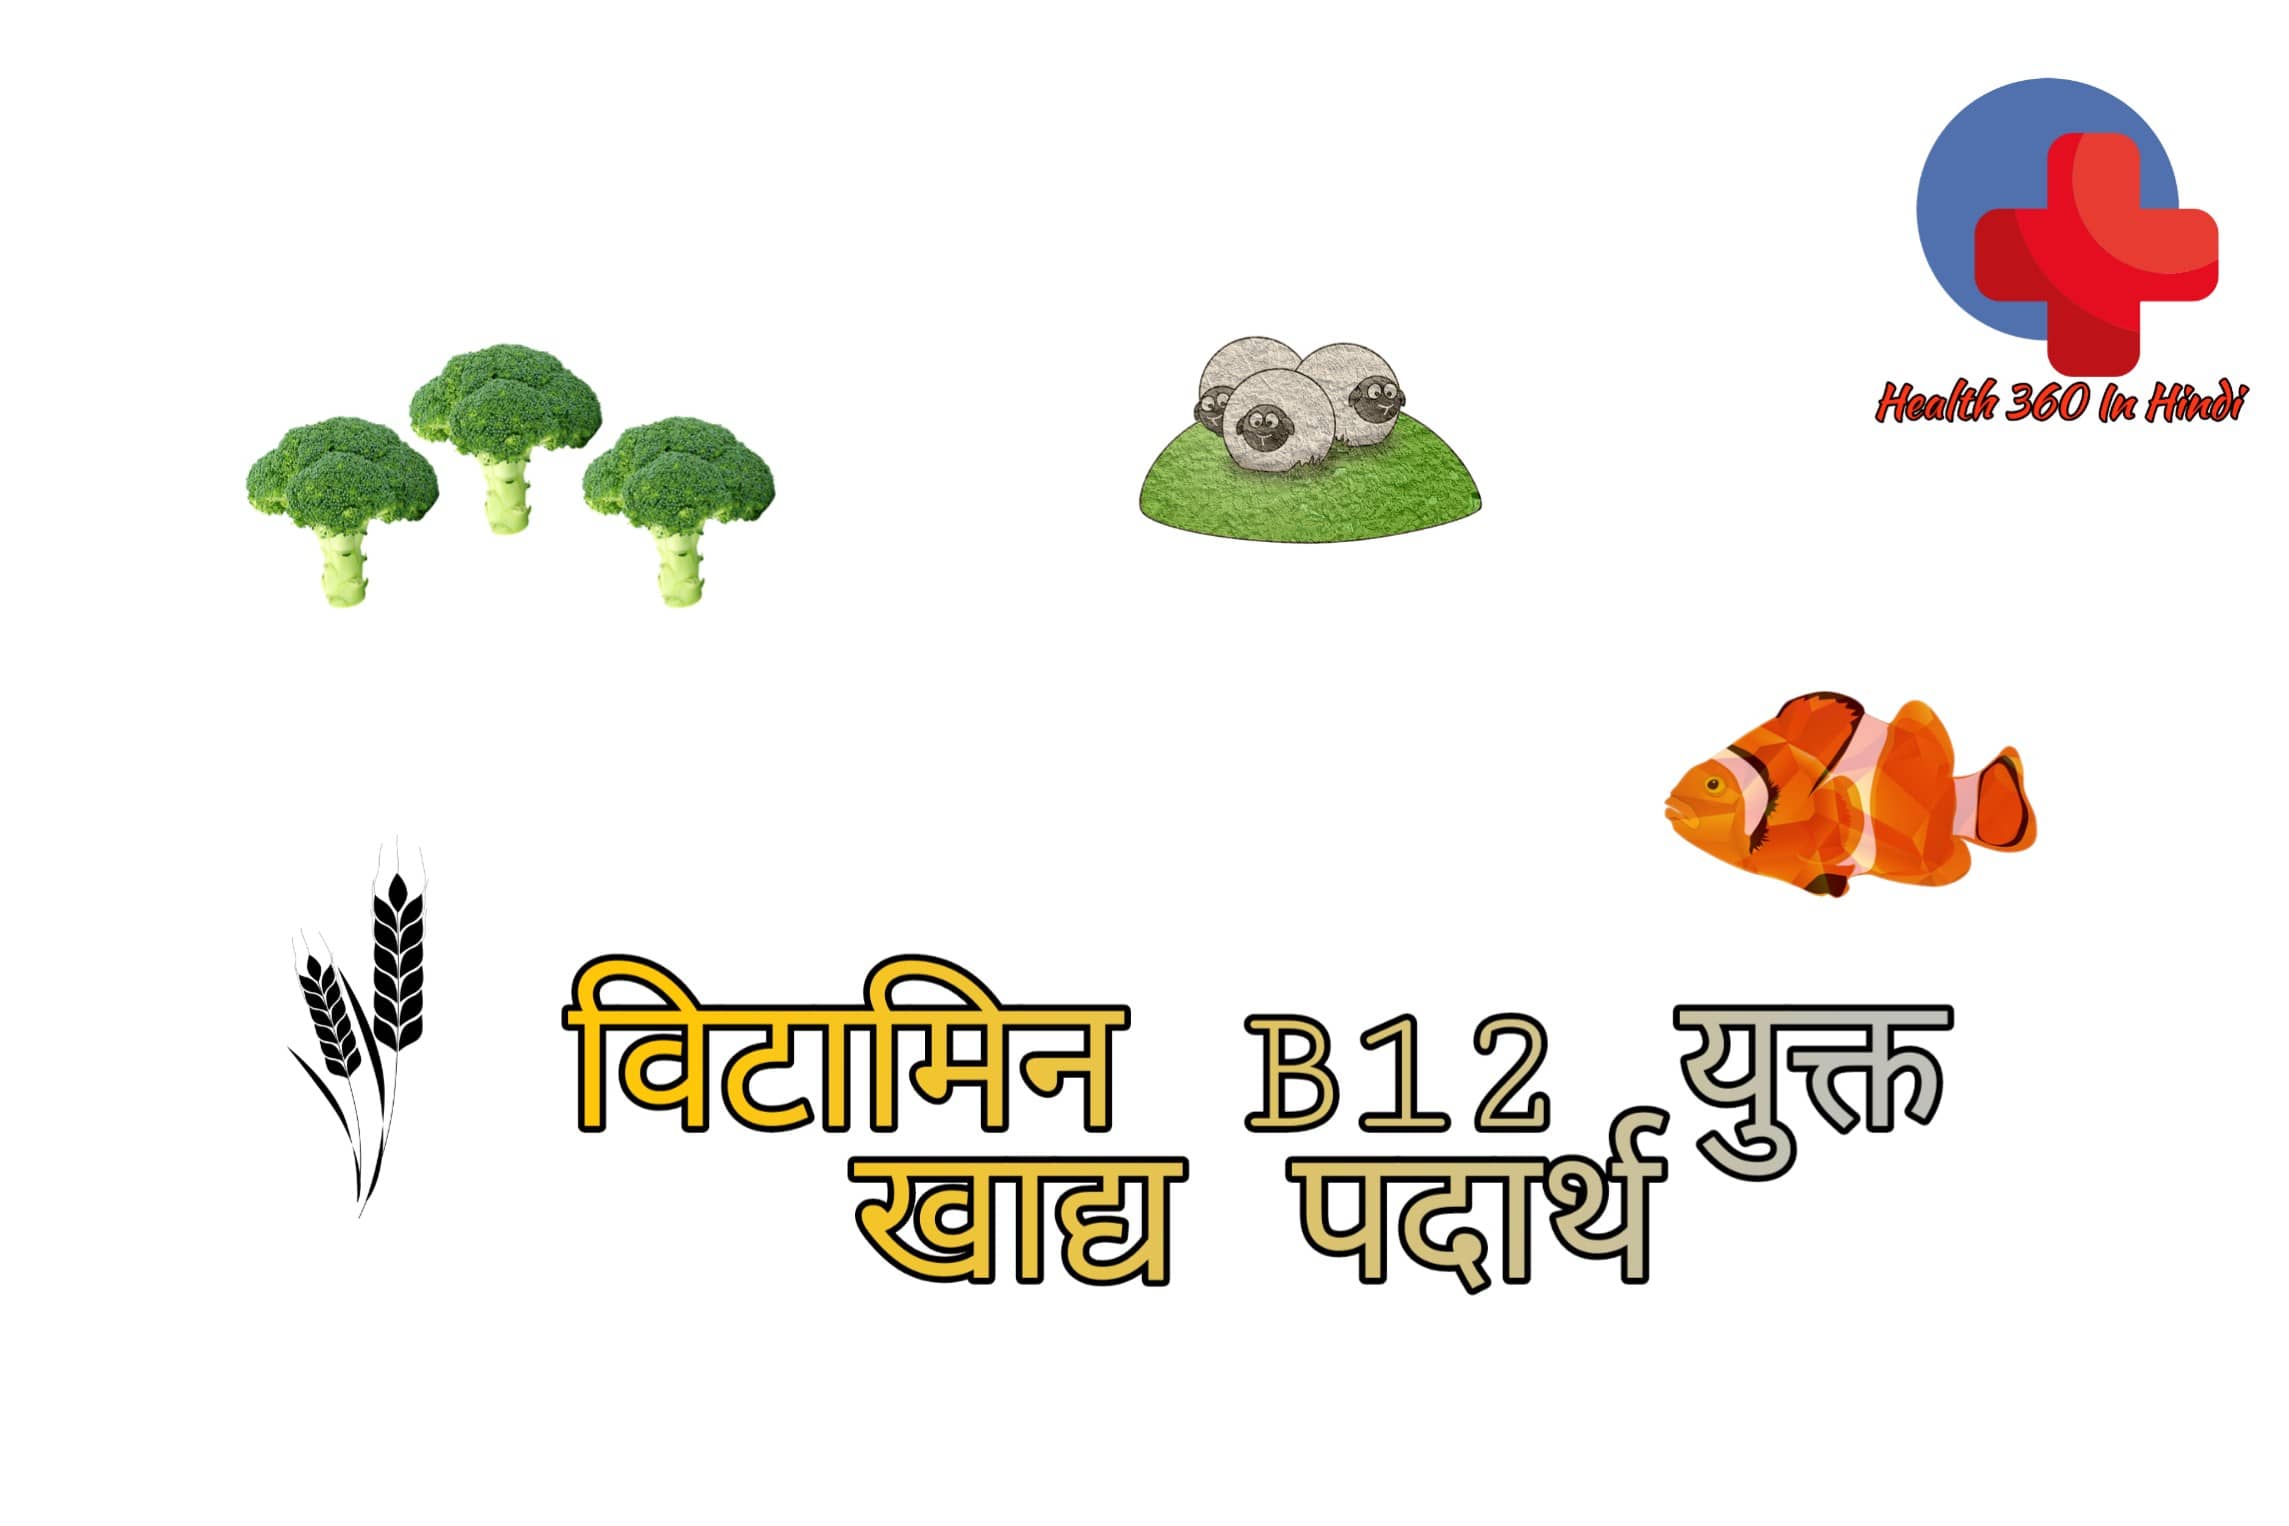 Vitamin b12 foods list in hindi